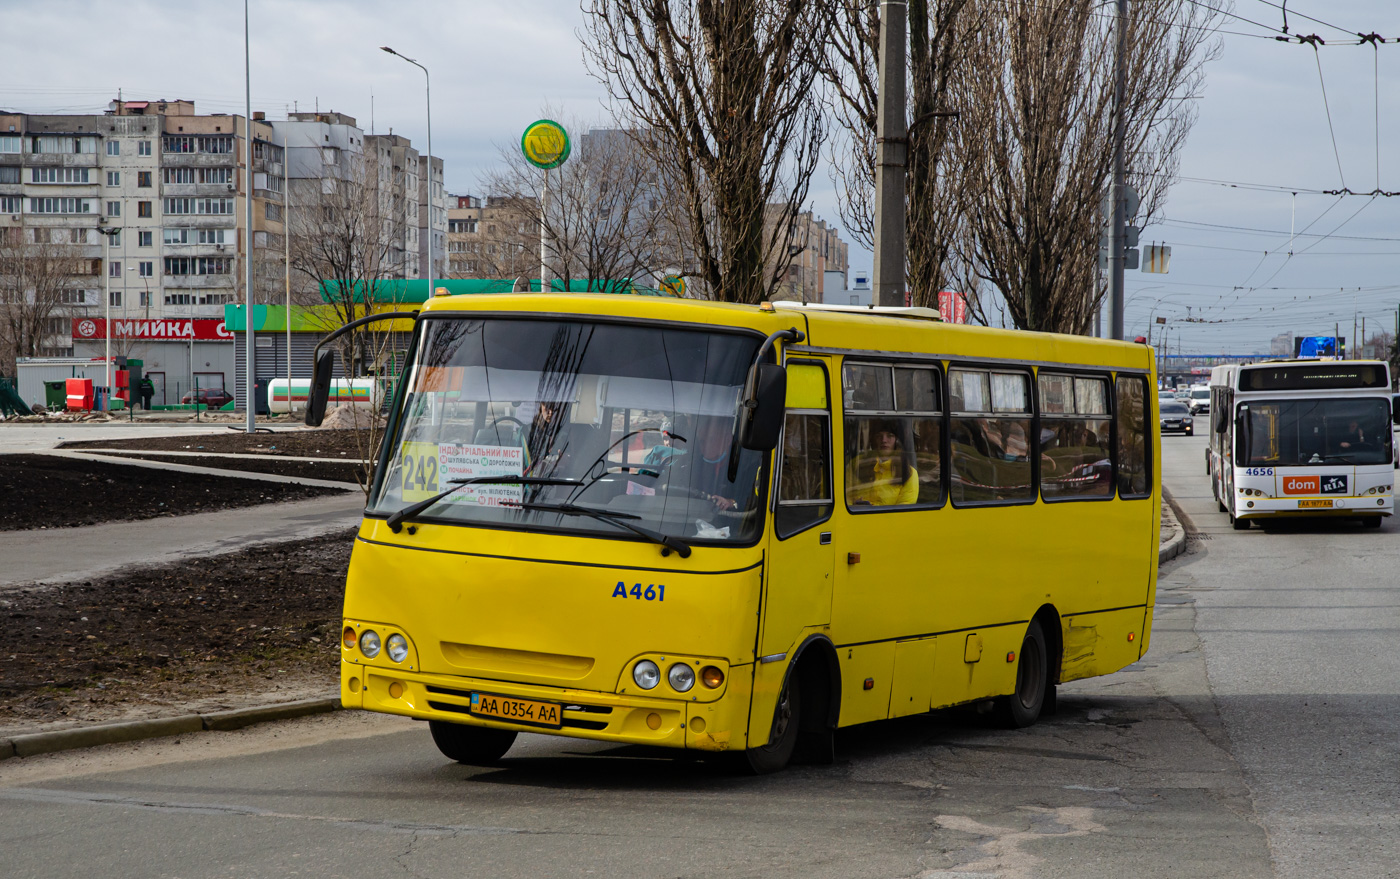 Kyiv, Bogdan A09202 # А461